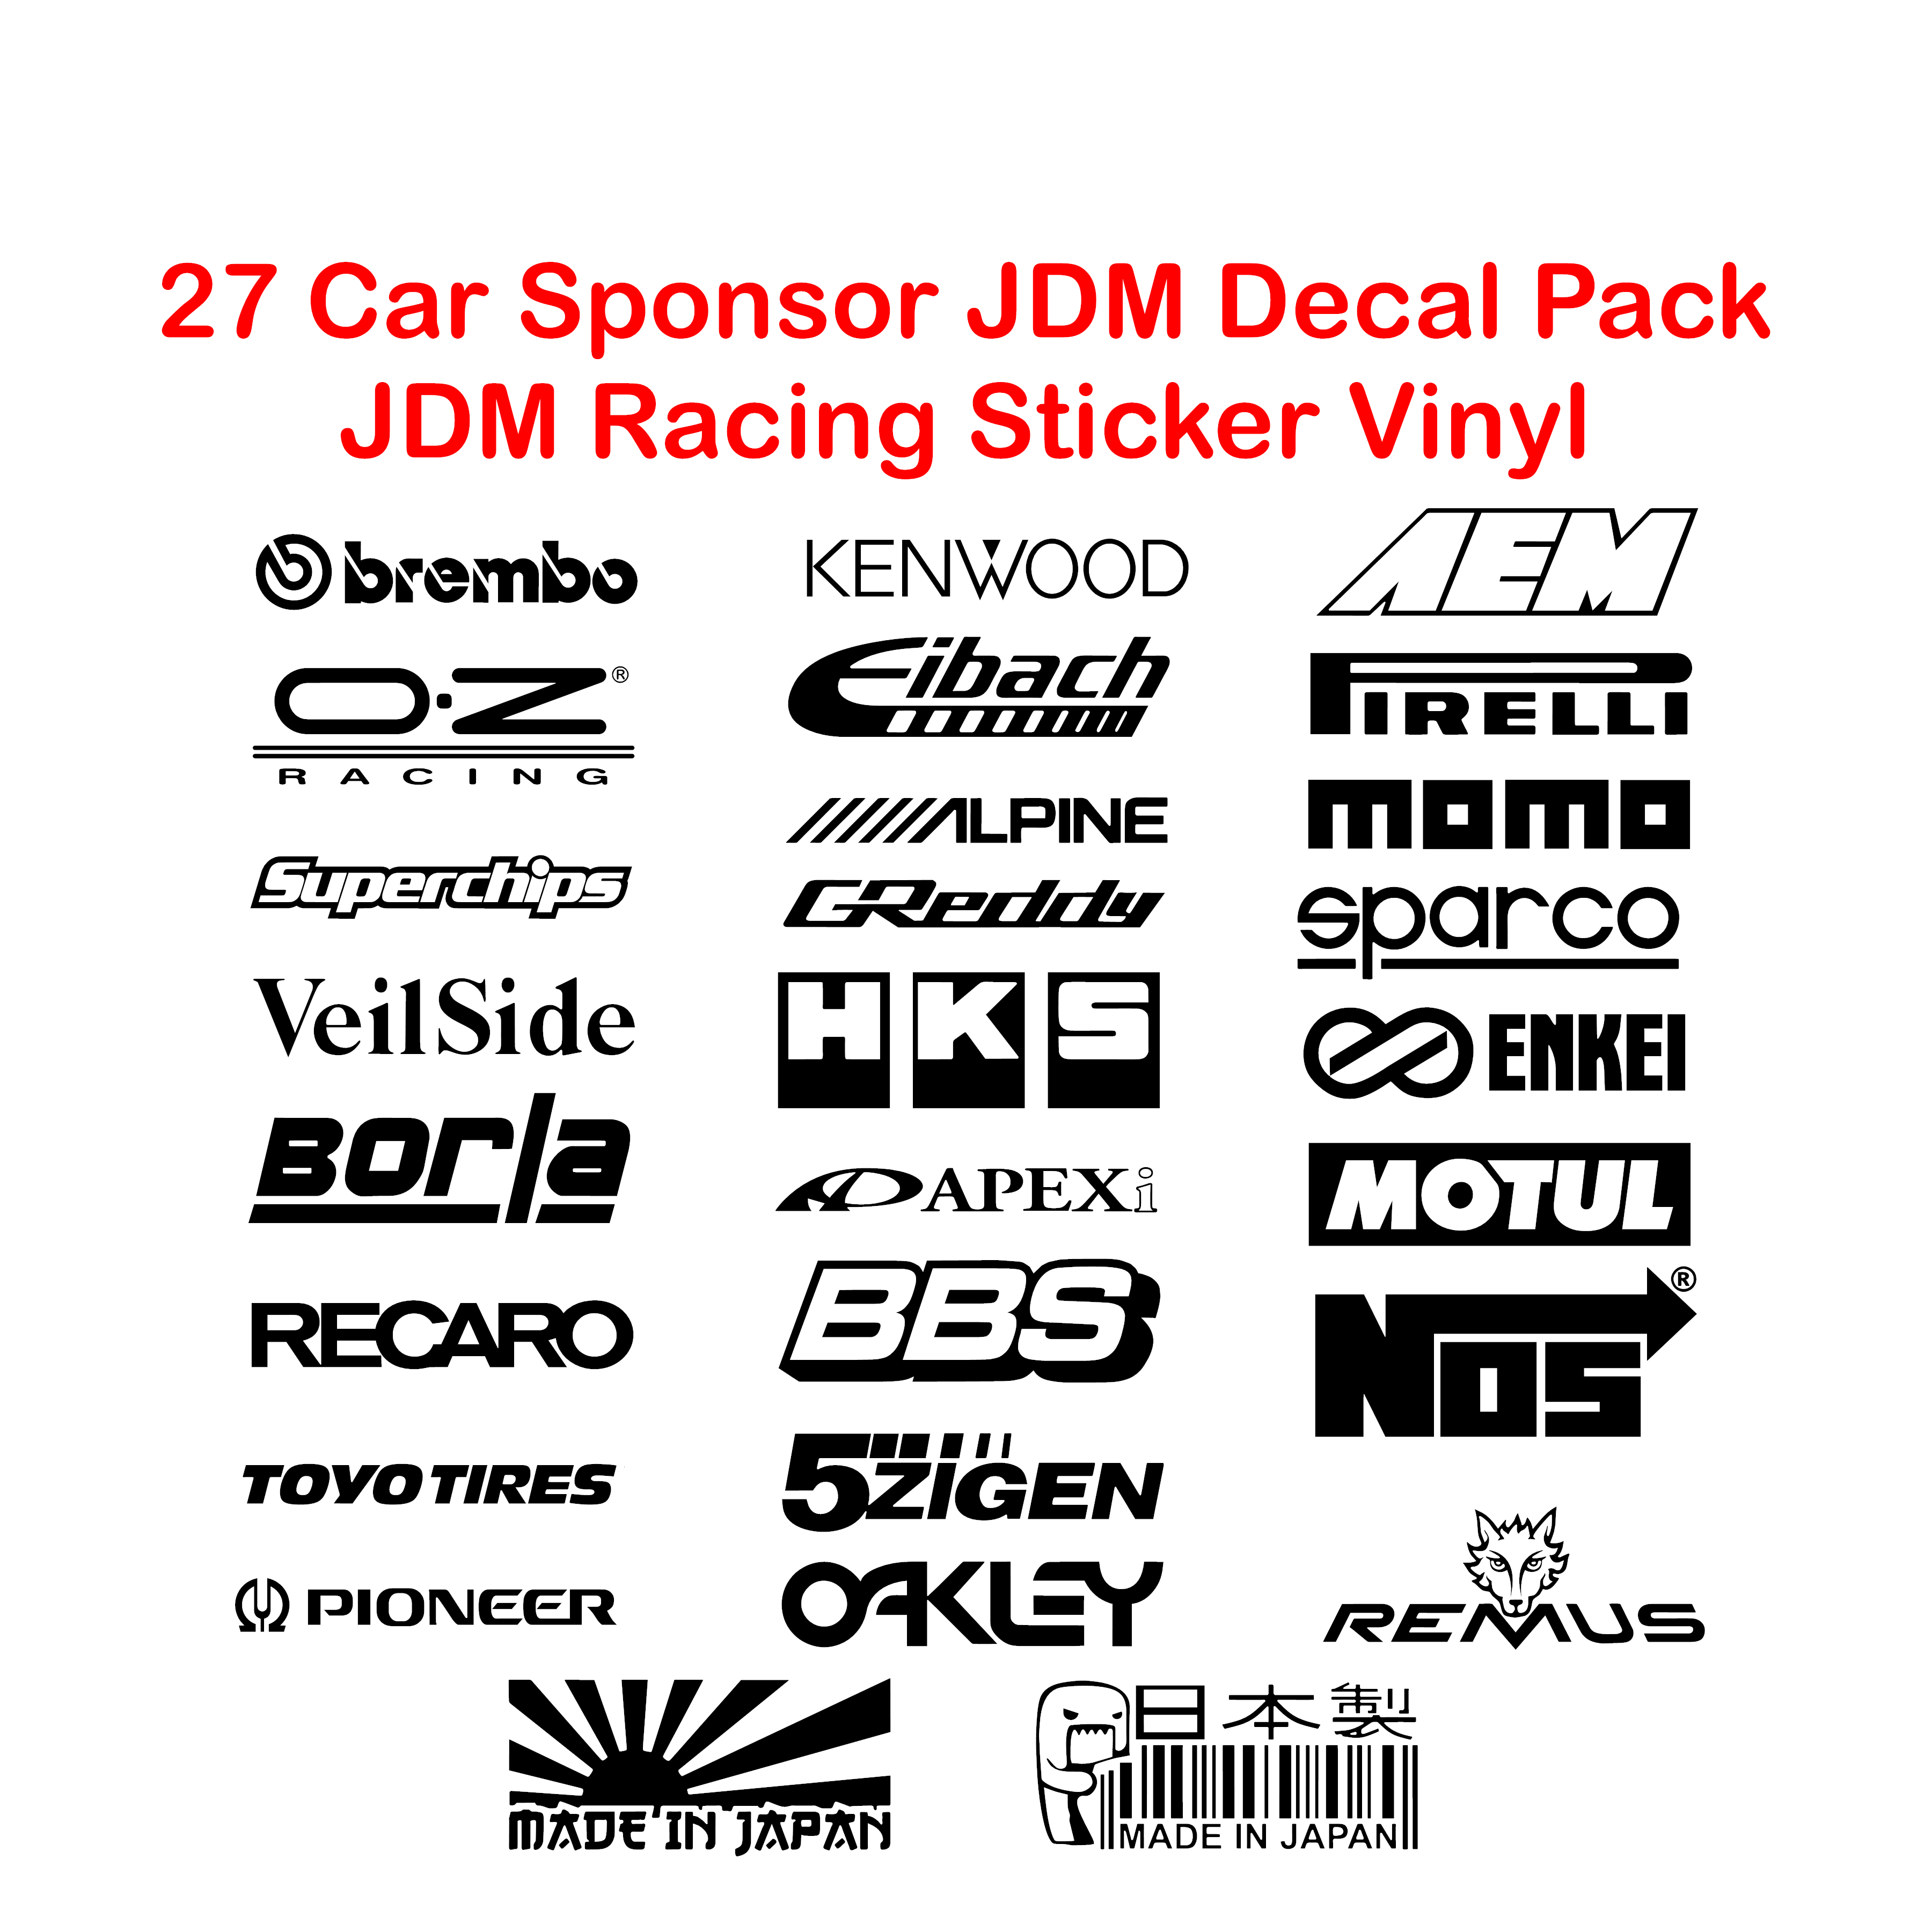 Details about    jdm Kanji lettering vinyl decal sticker sponsor racing bumper window funny car 